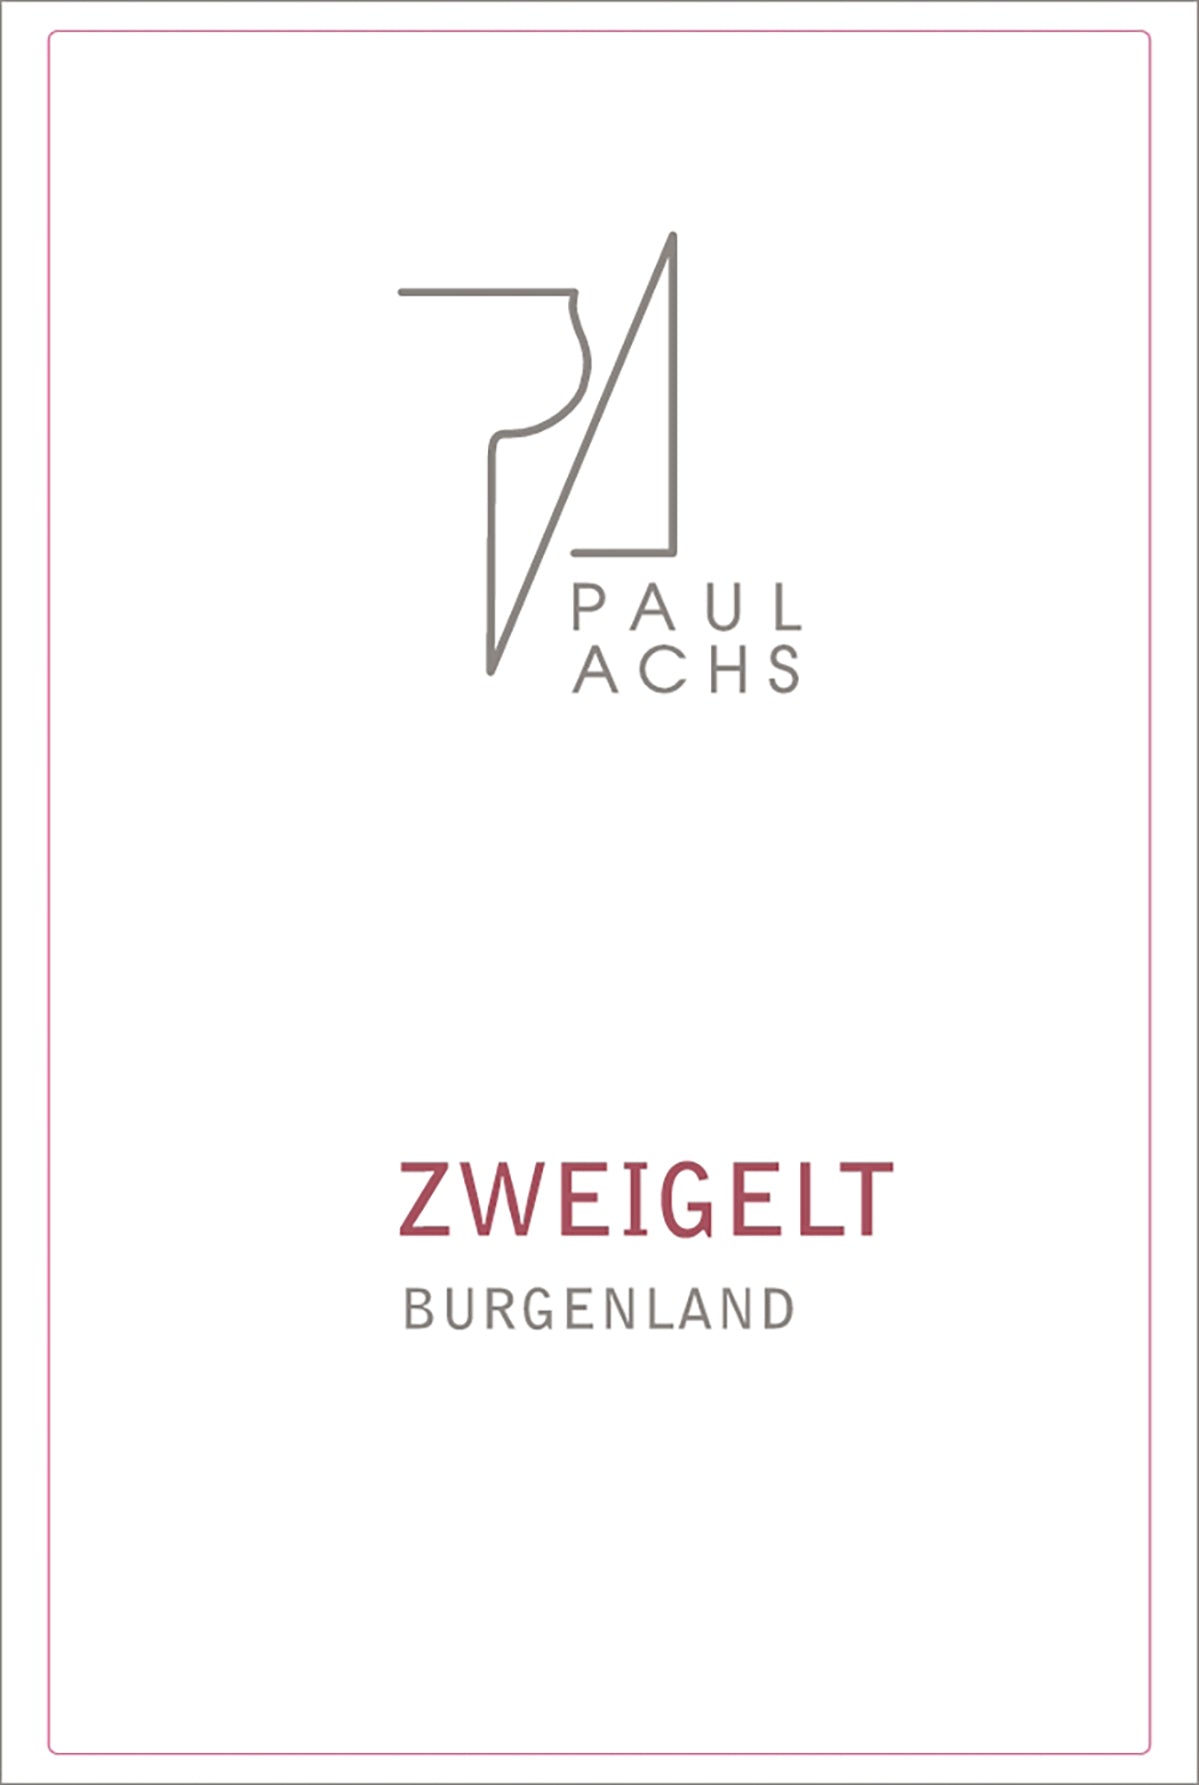 Paul Achs Zweigelt